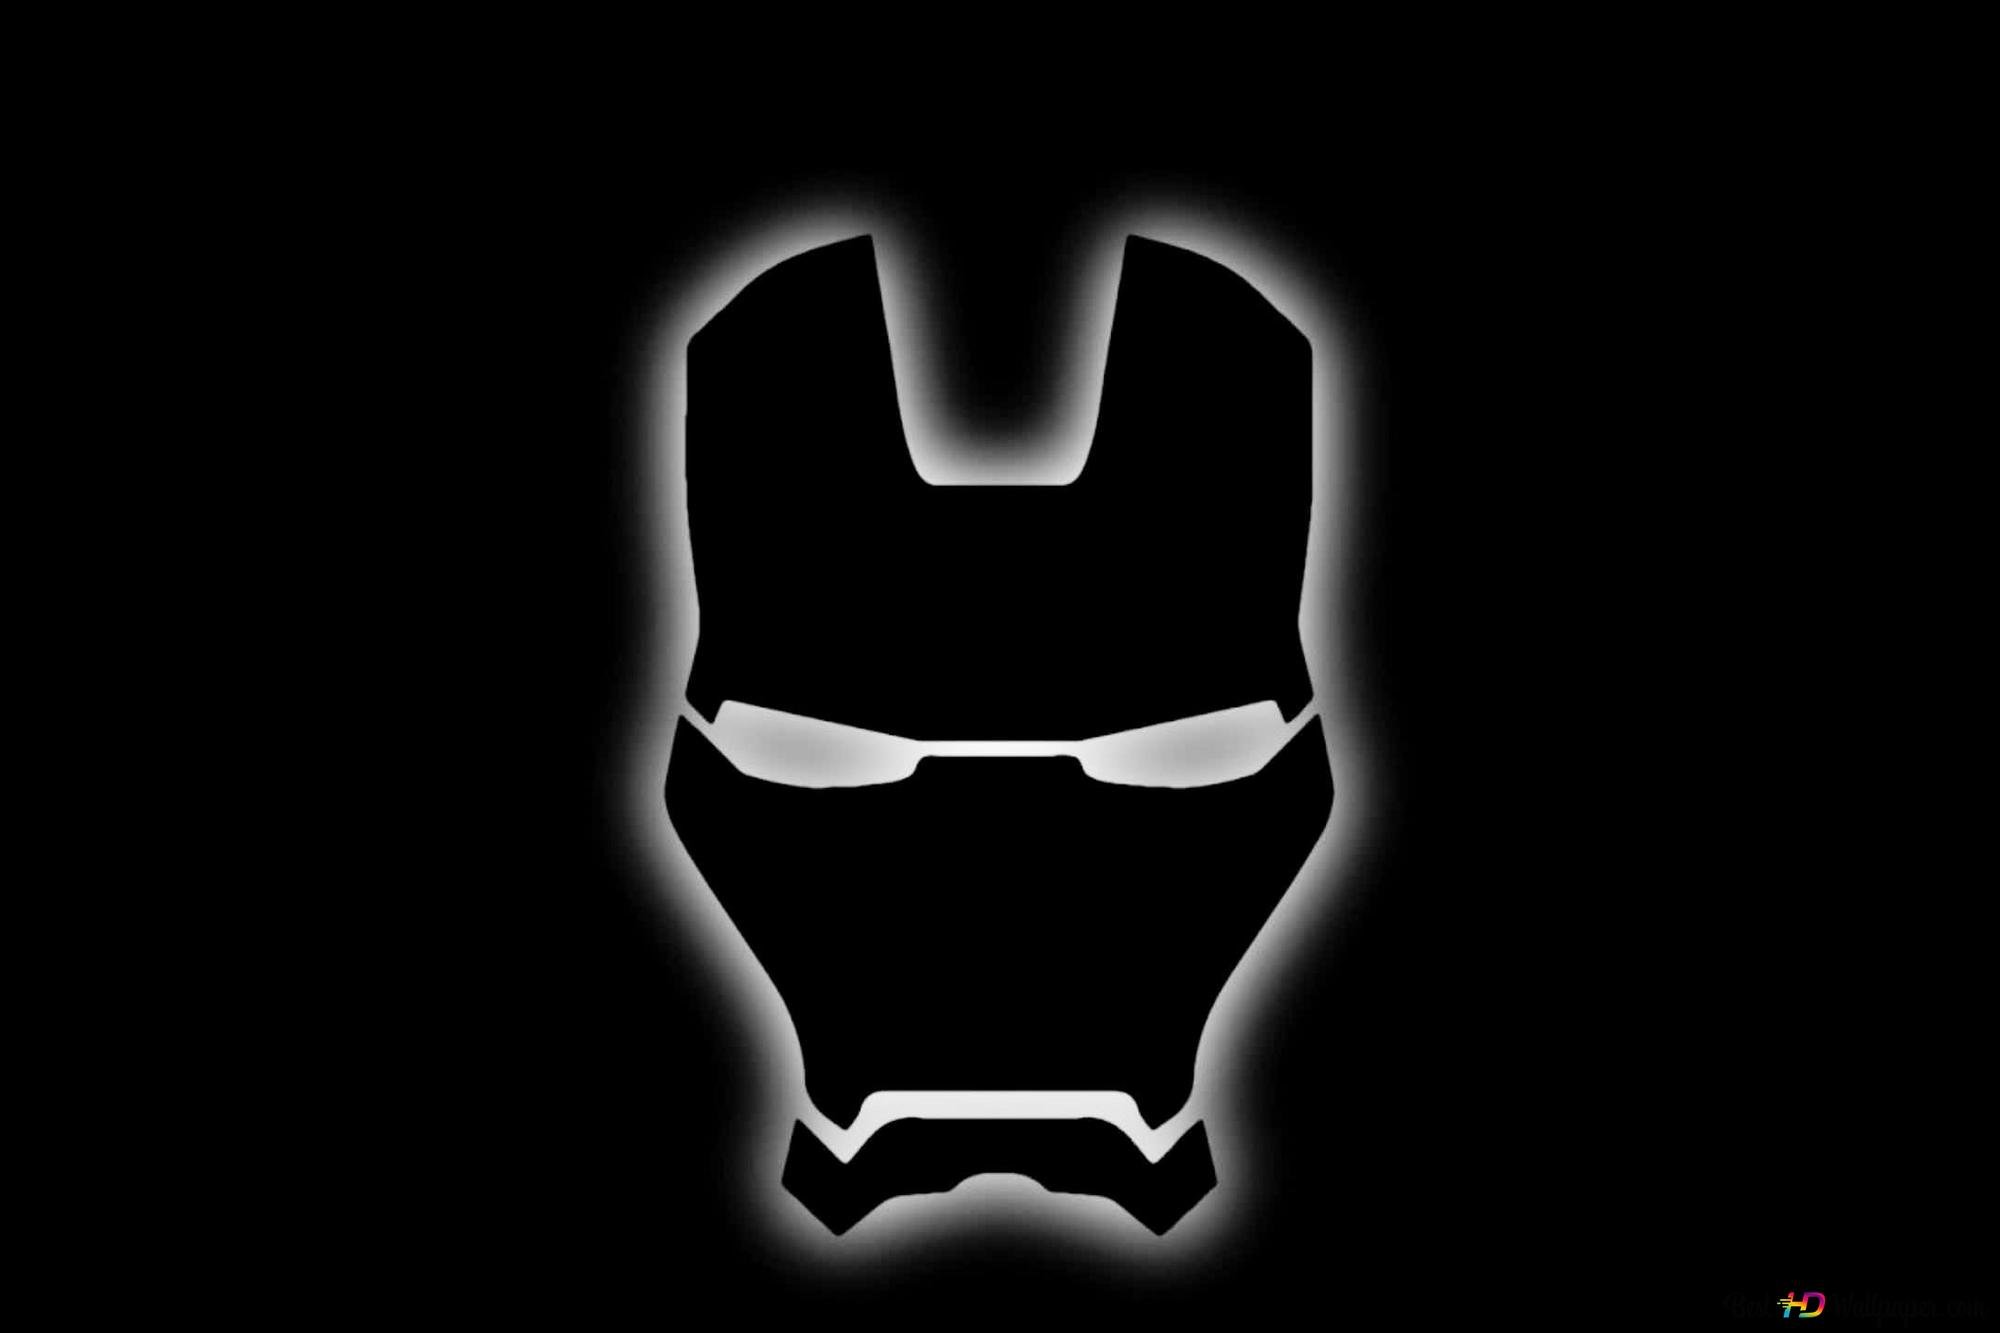 Black and white minimalist logo of Iron Man movie superhero 2K wallpaper download